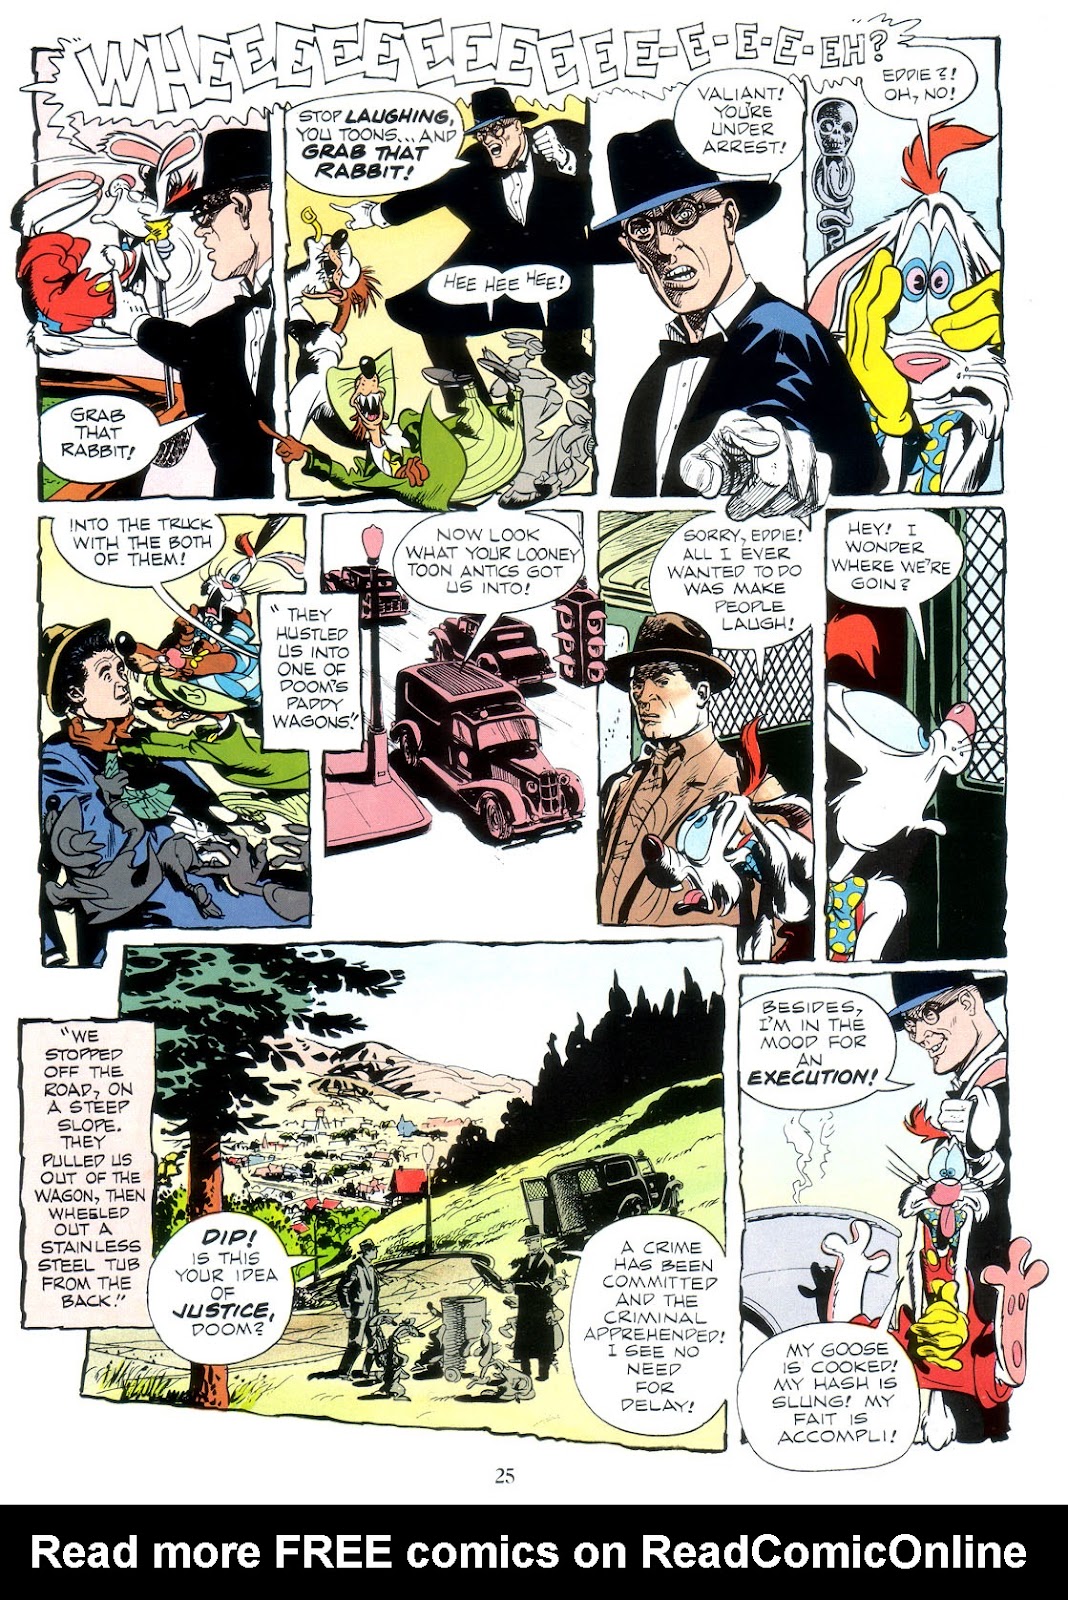 Marvel Graphic Novel issue 41 - Who Framed Roger Rabbit - Page 27